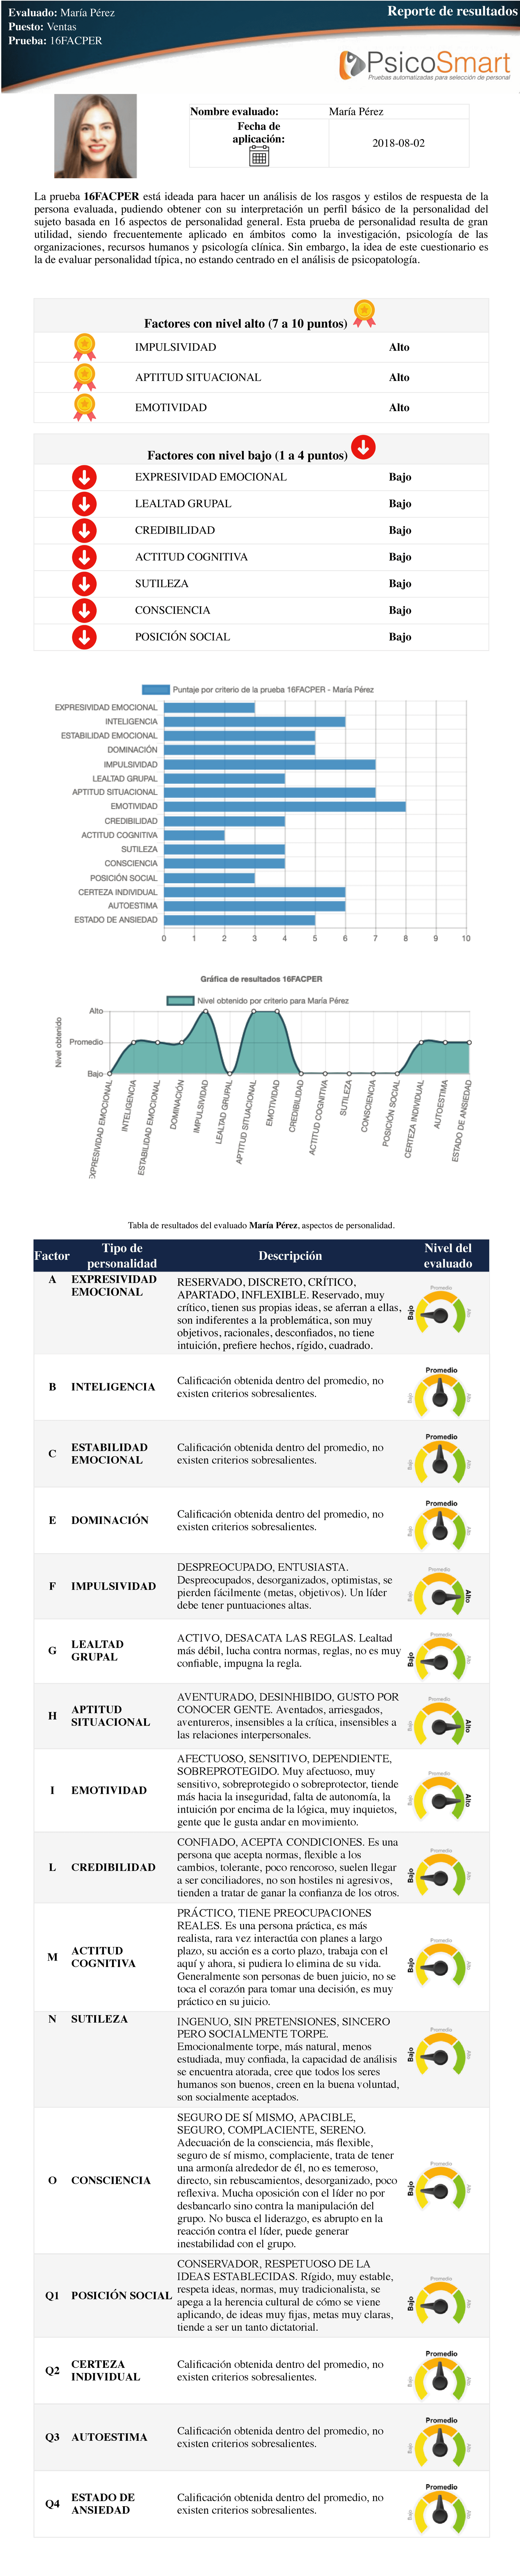 psicosmart example report